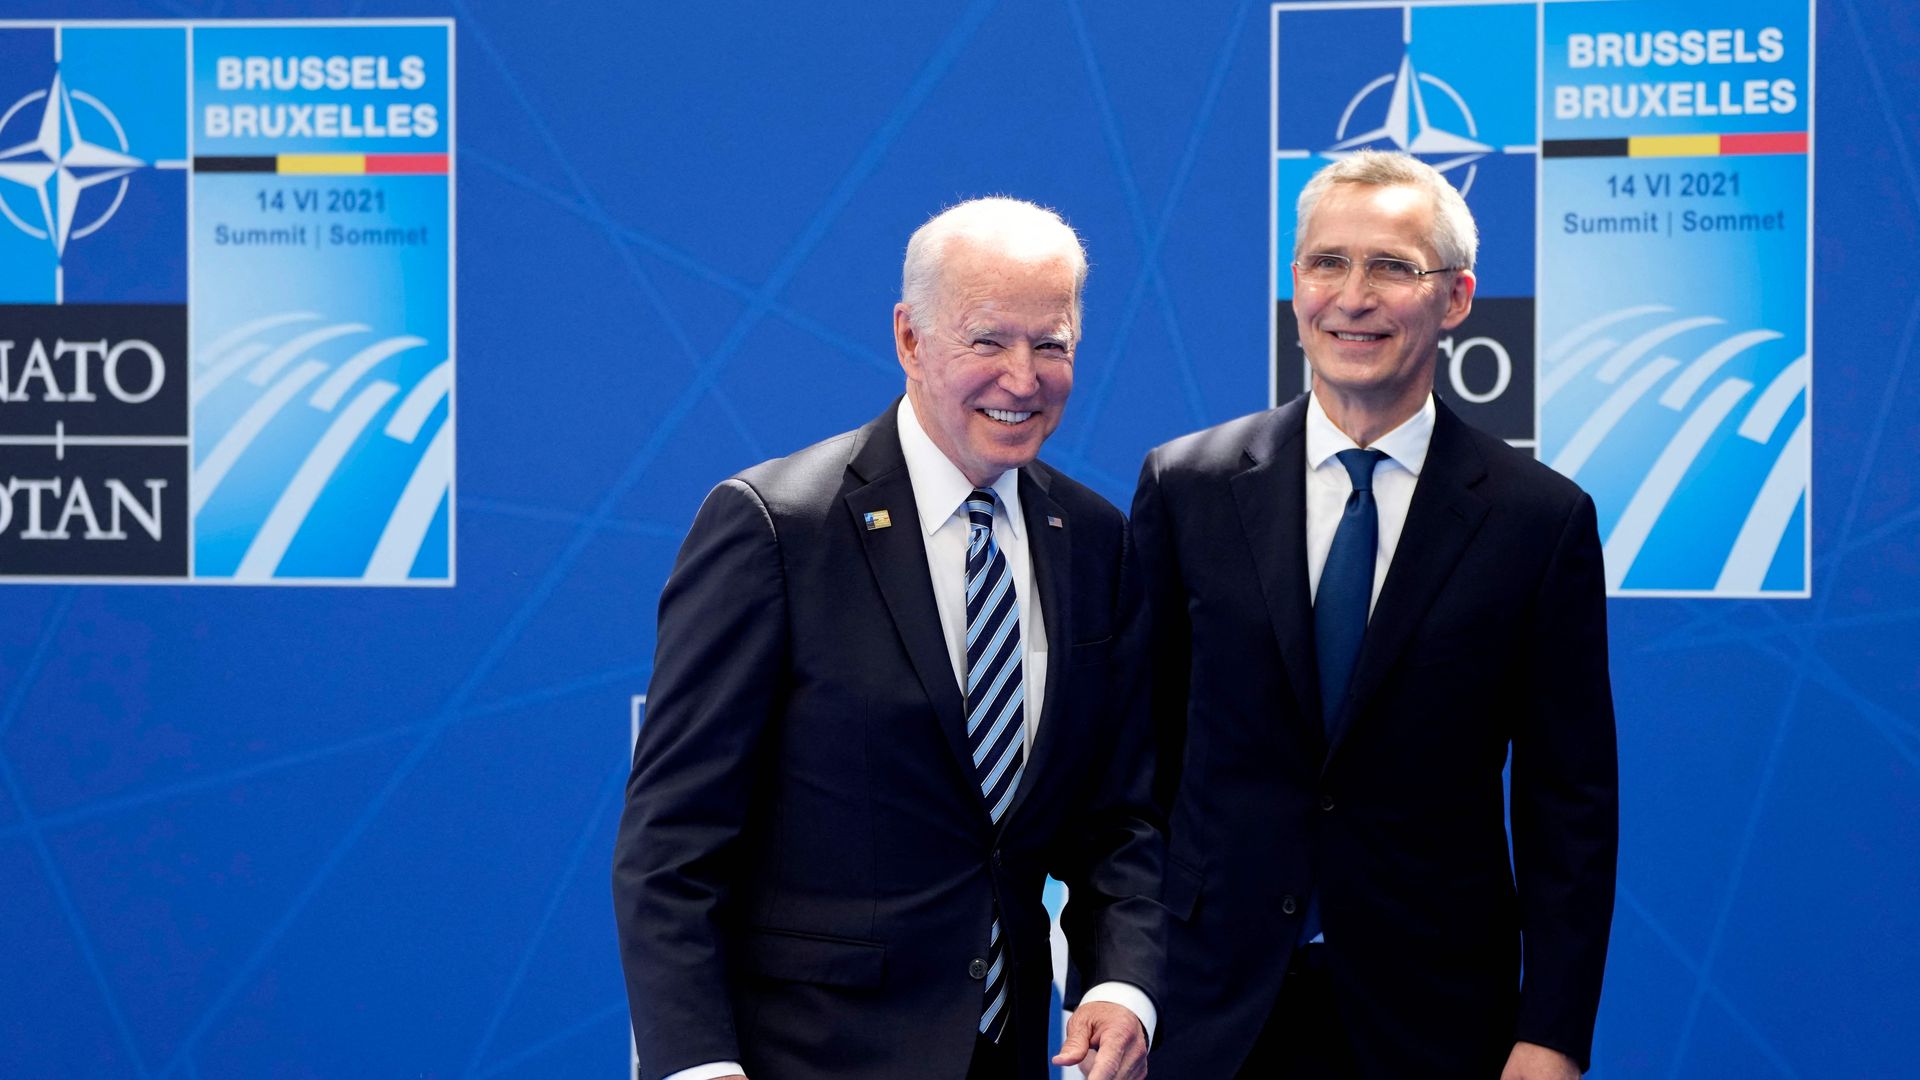 Biden and Jens Stoltenberg